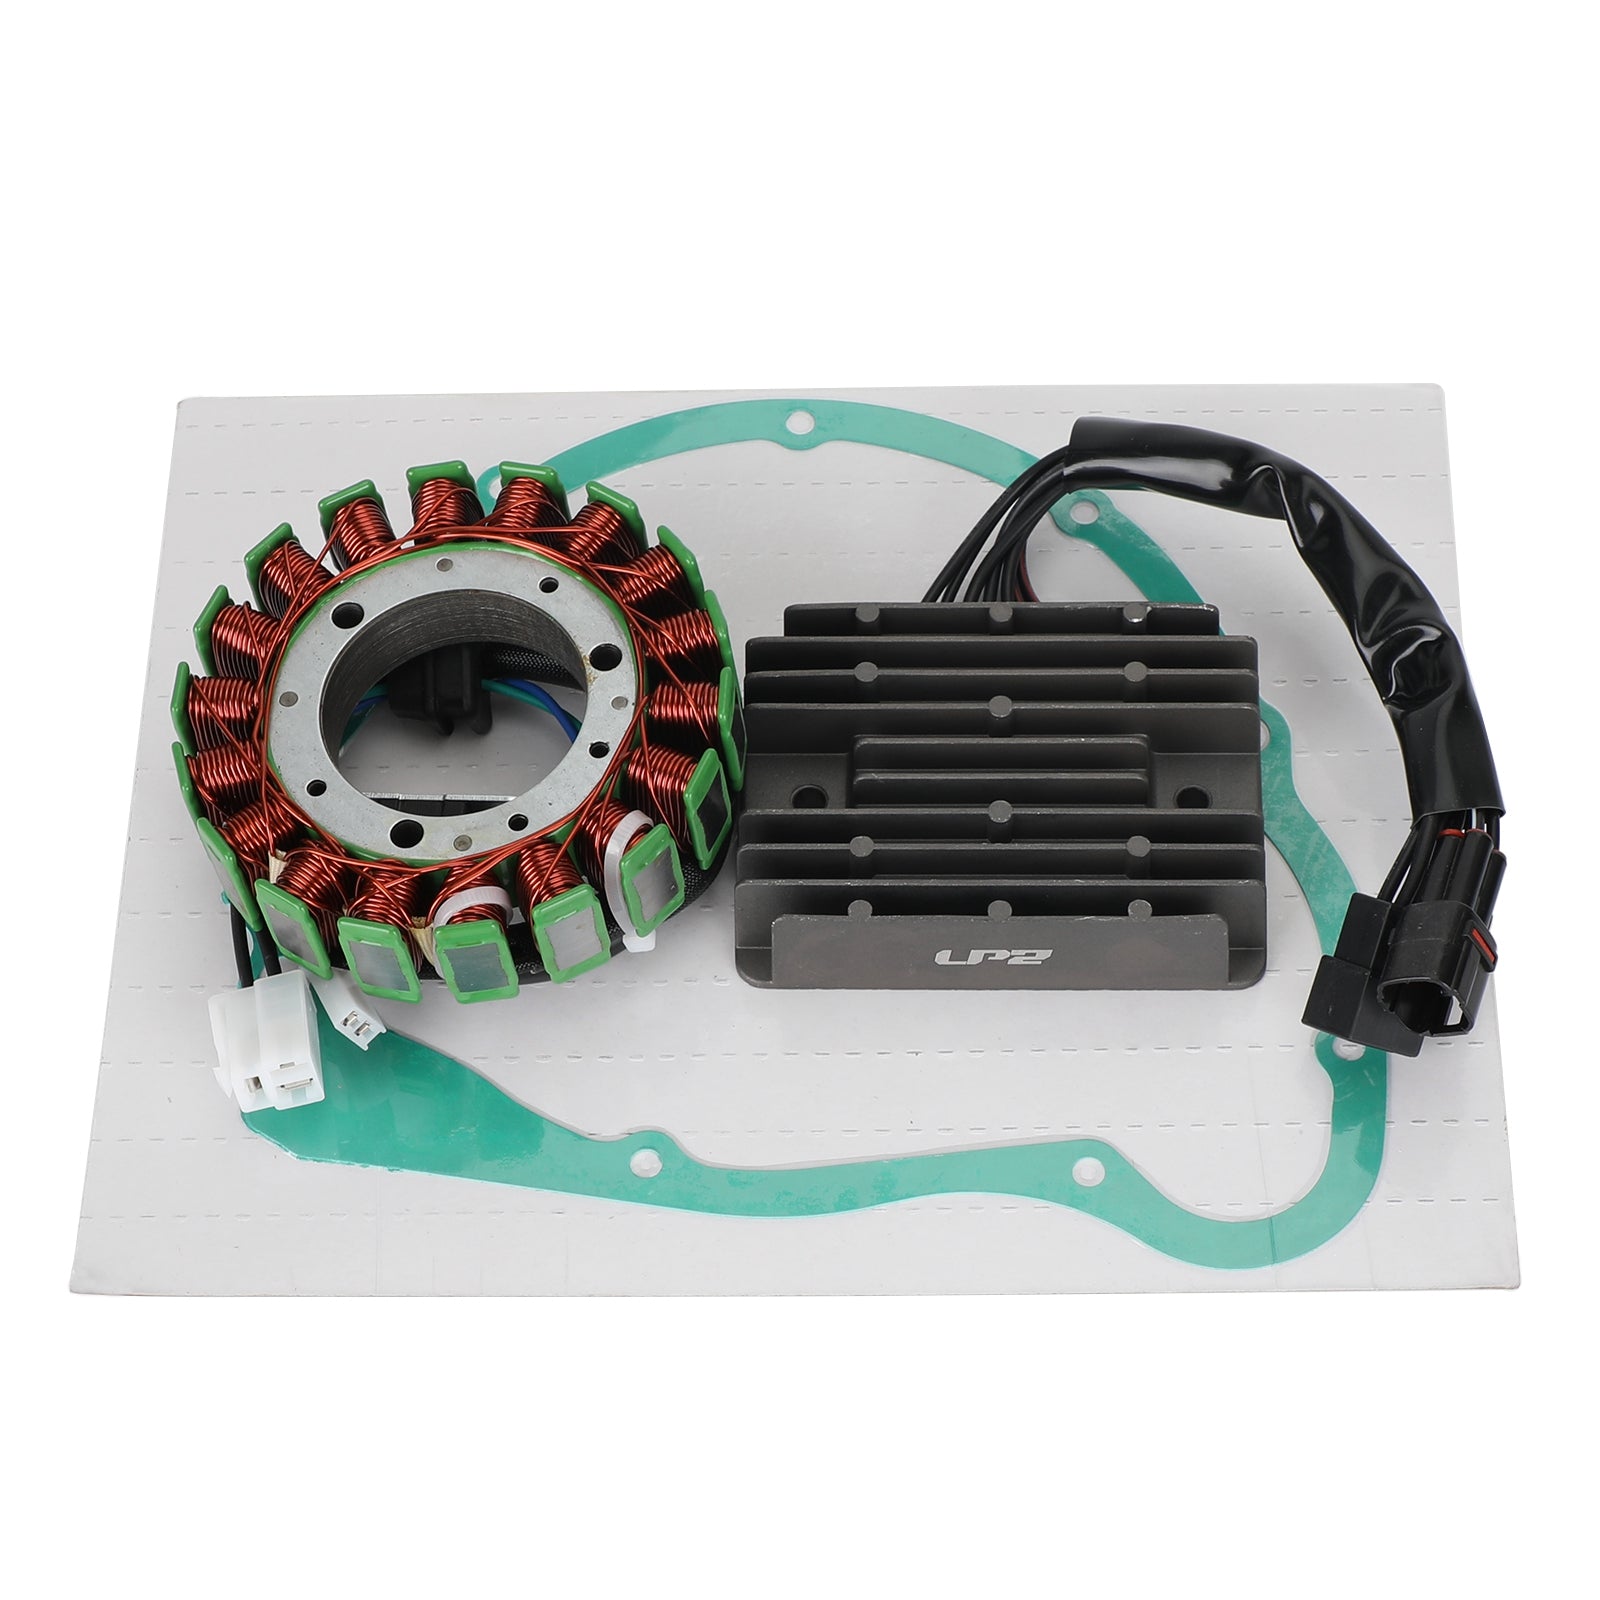 Guarnizione bobina regolatore magneto statore per Suzuki VL 1500 Intruder C1500 05-09 generico